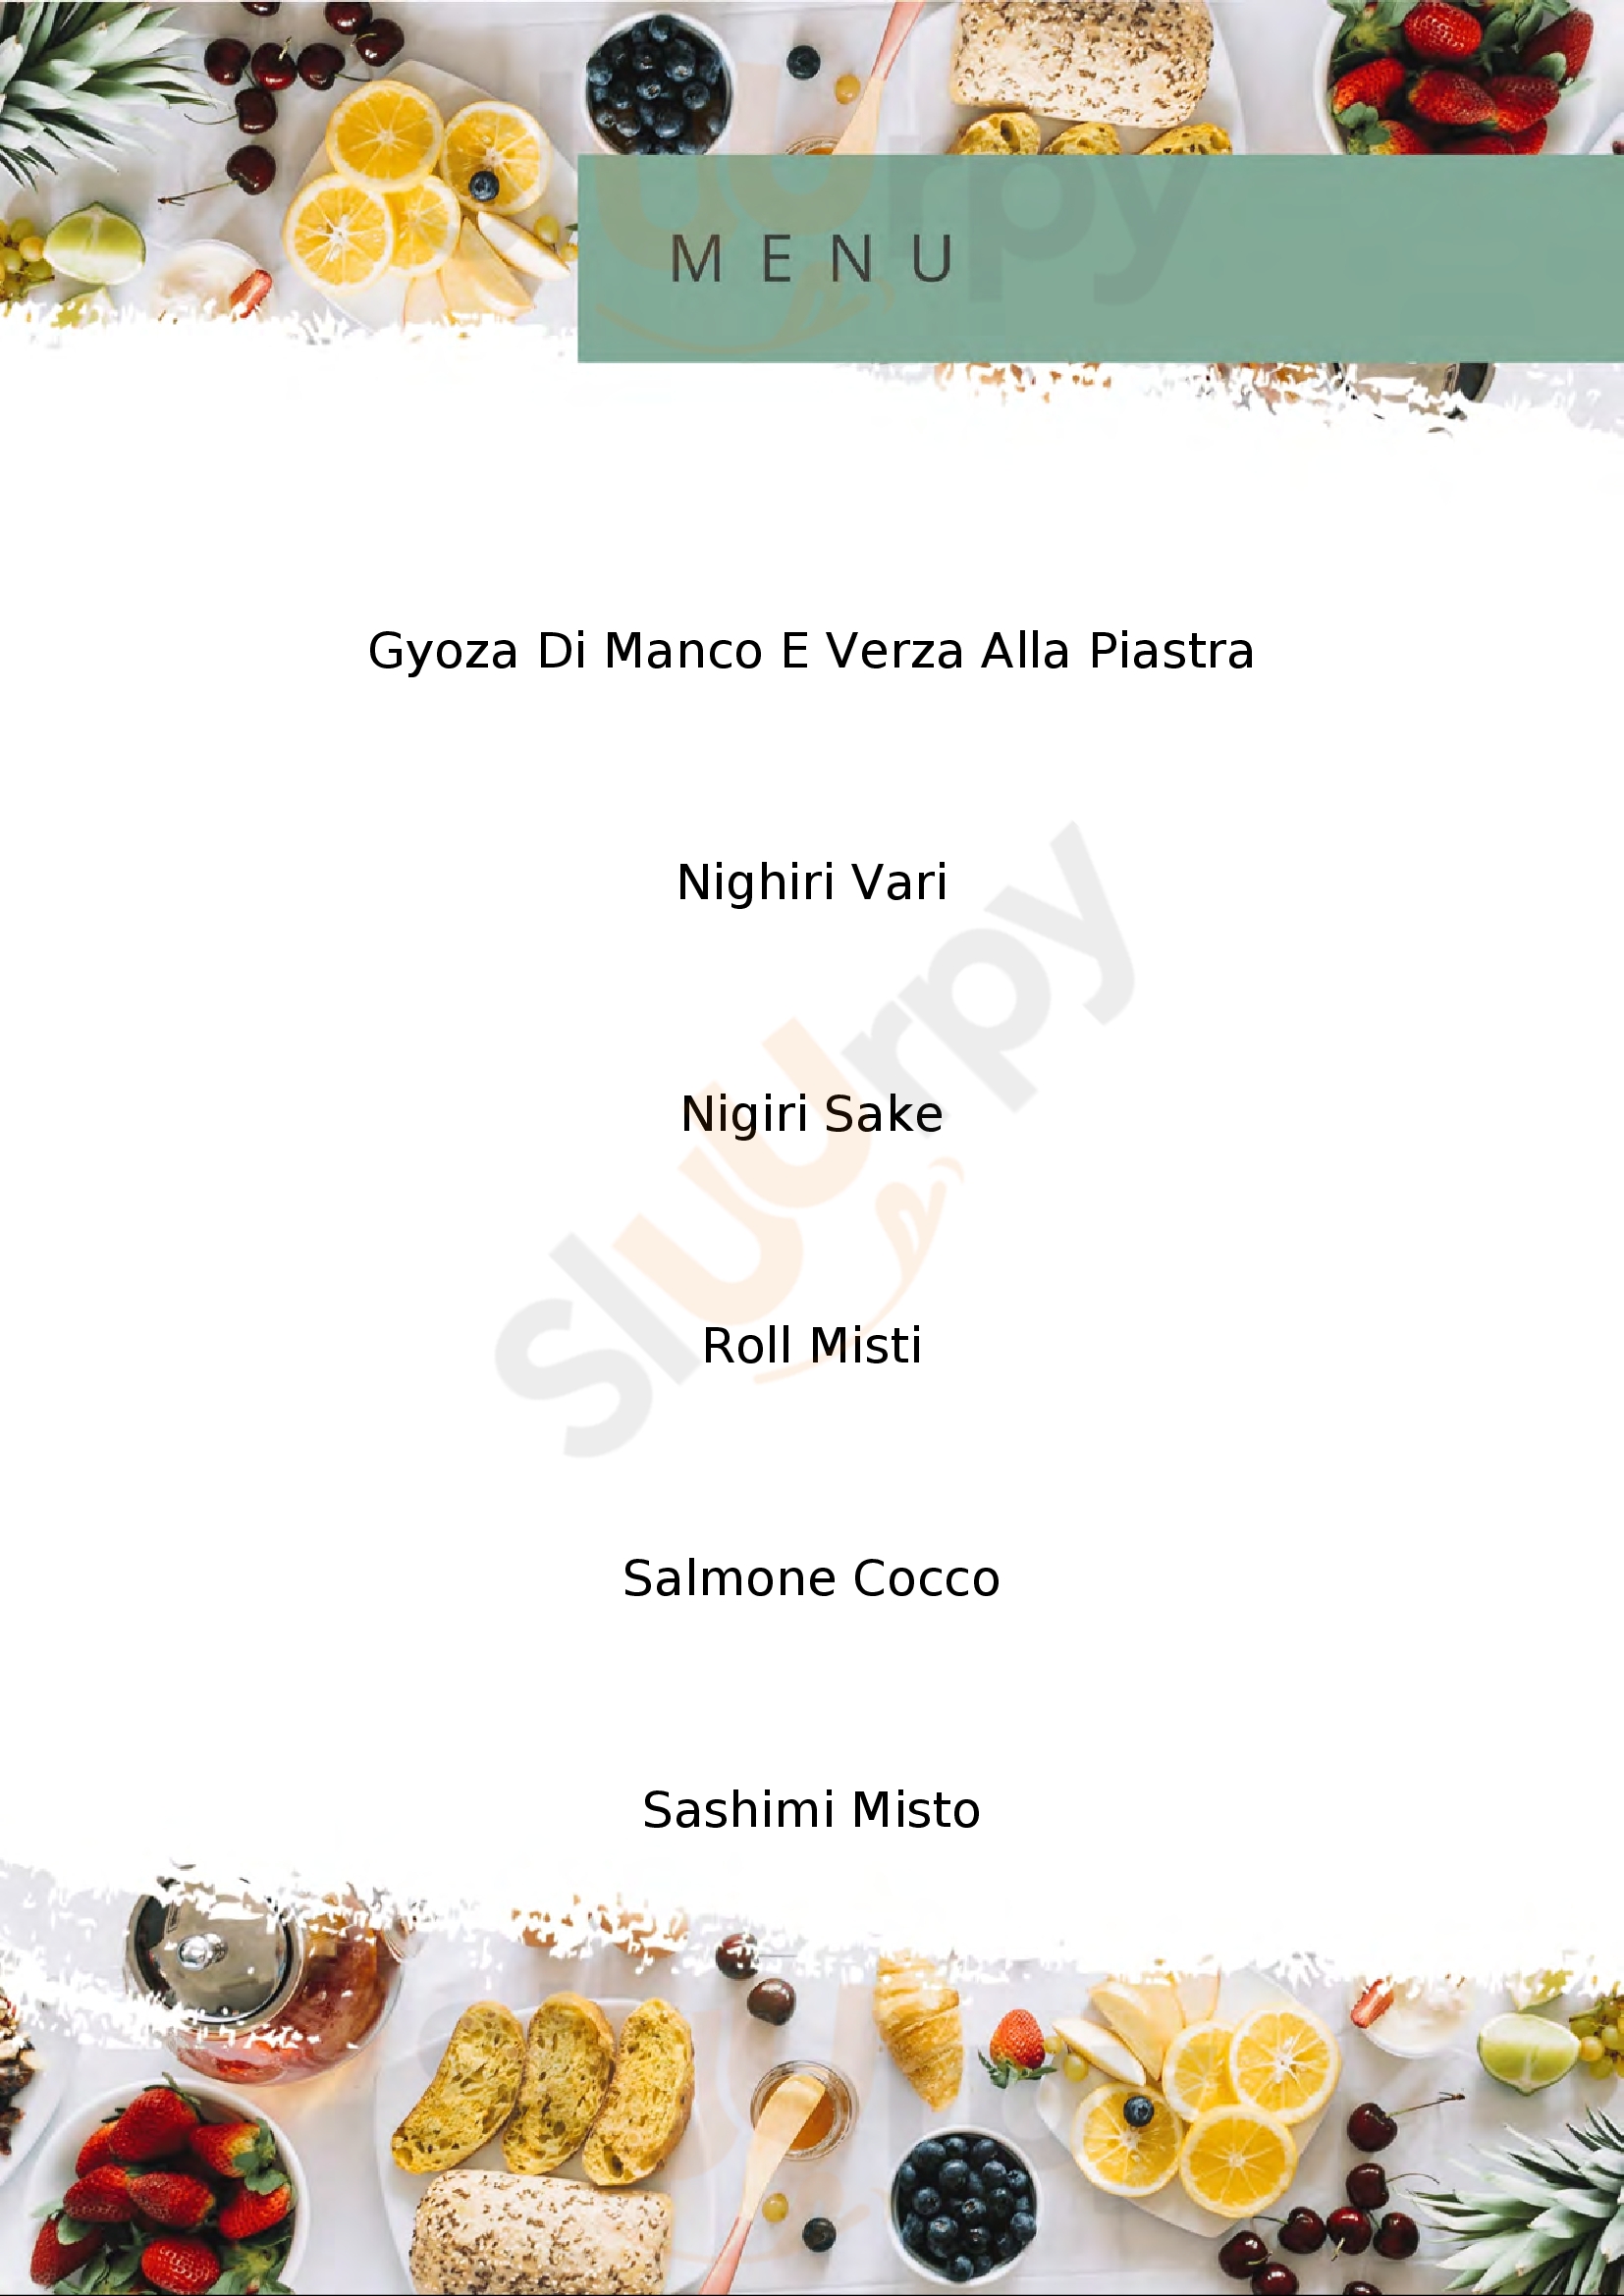 Goki Sushi Experience Roma menù 1 pagina